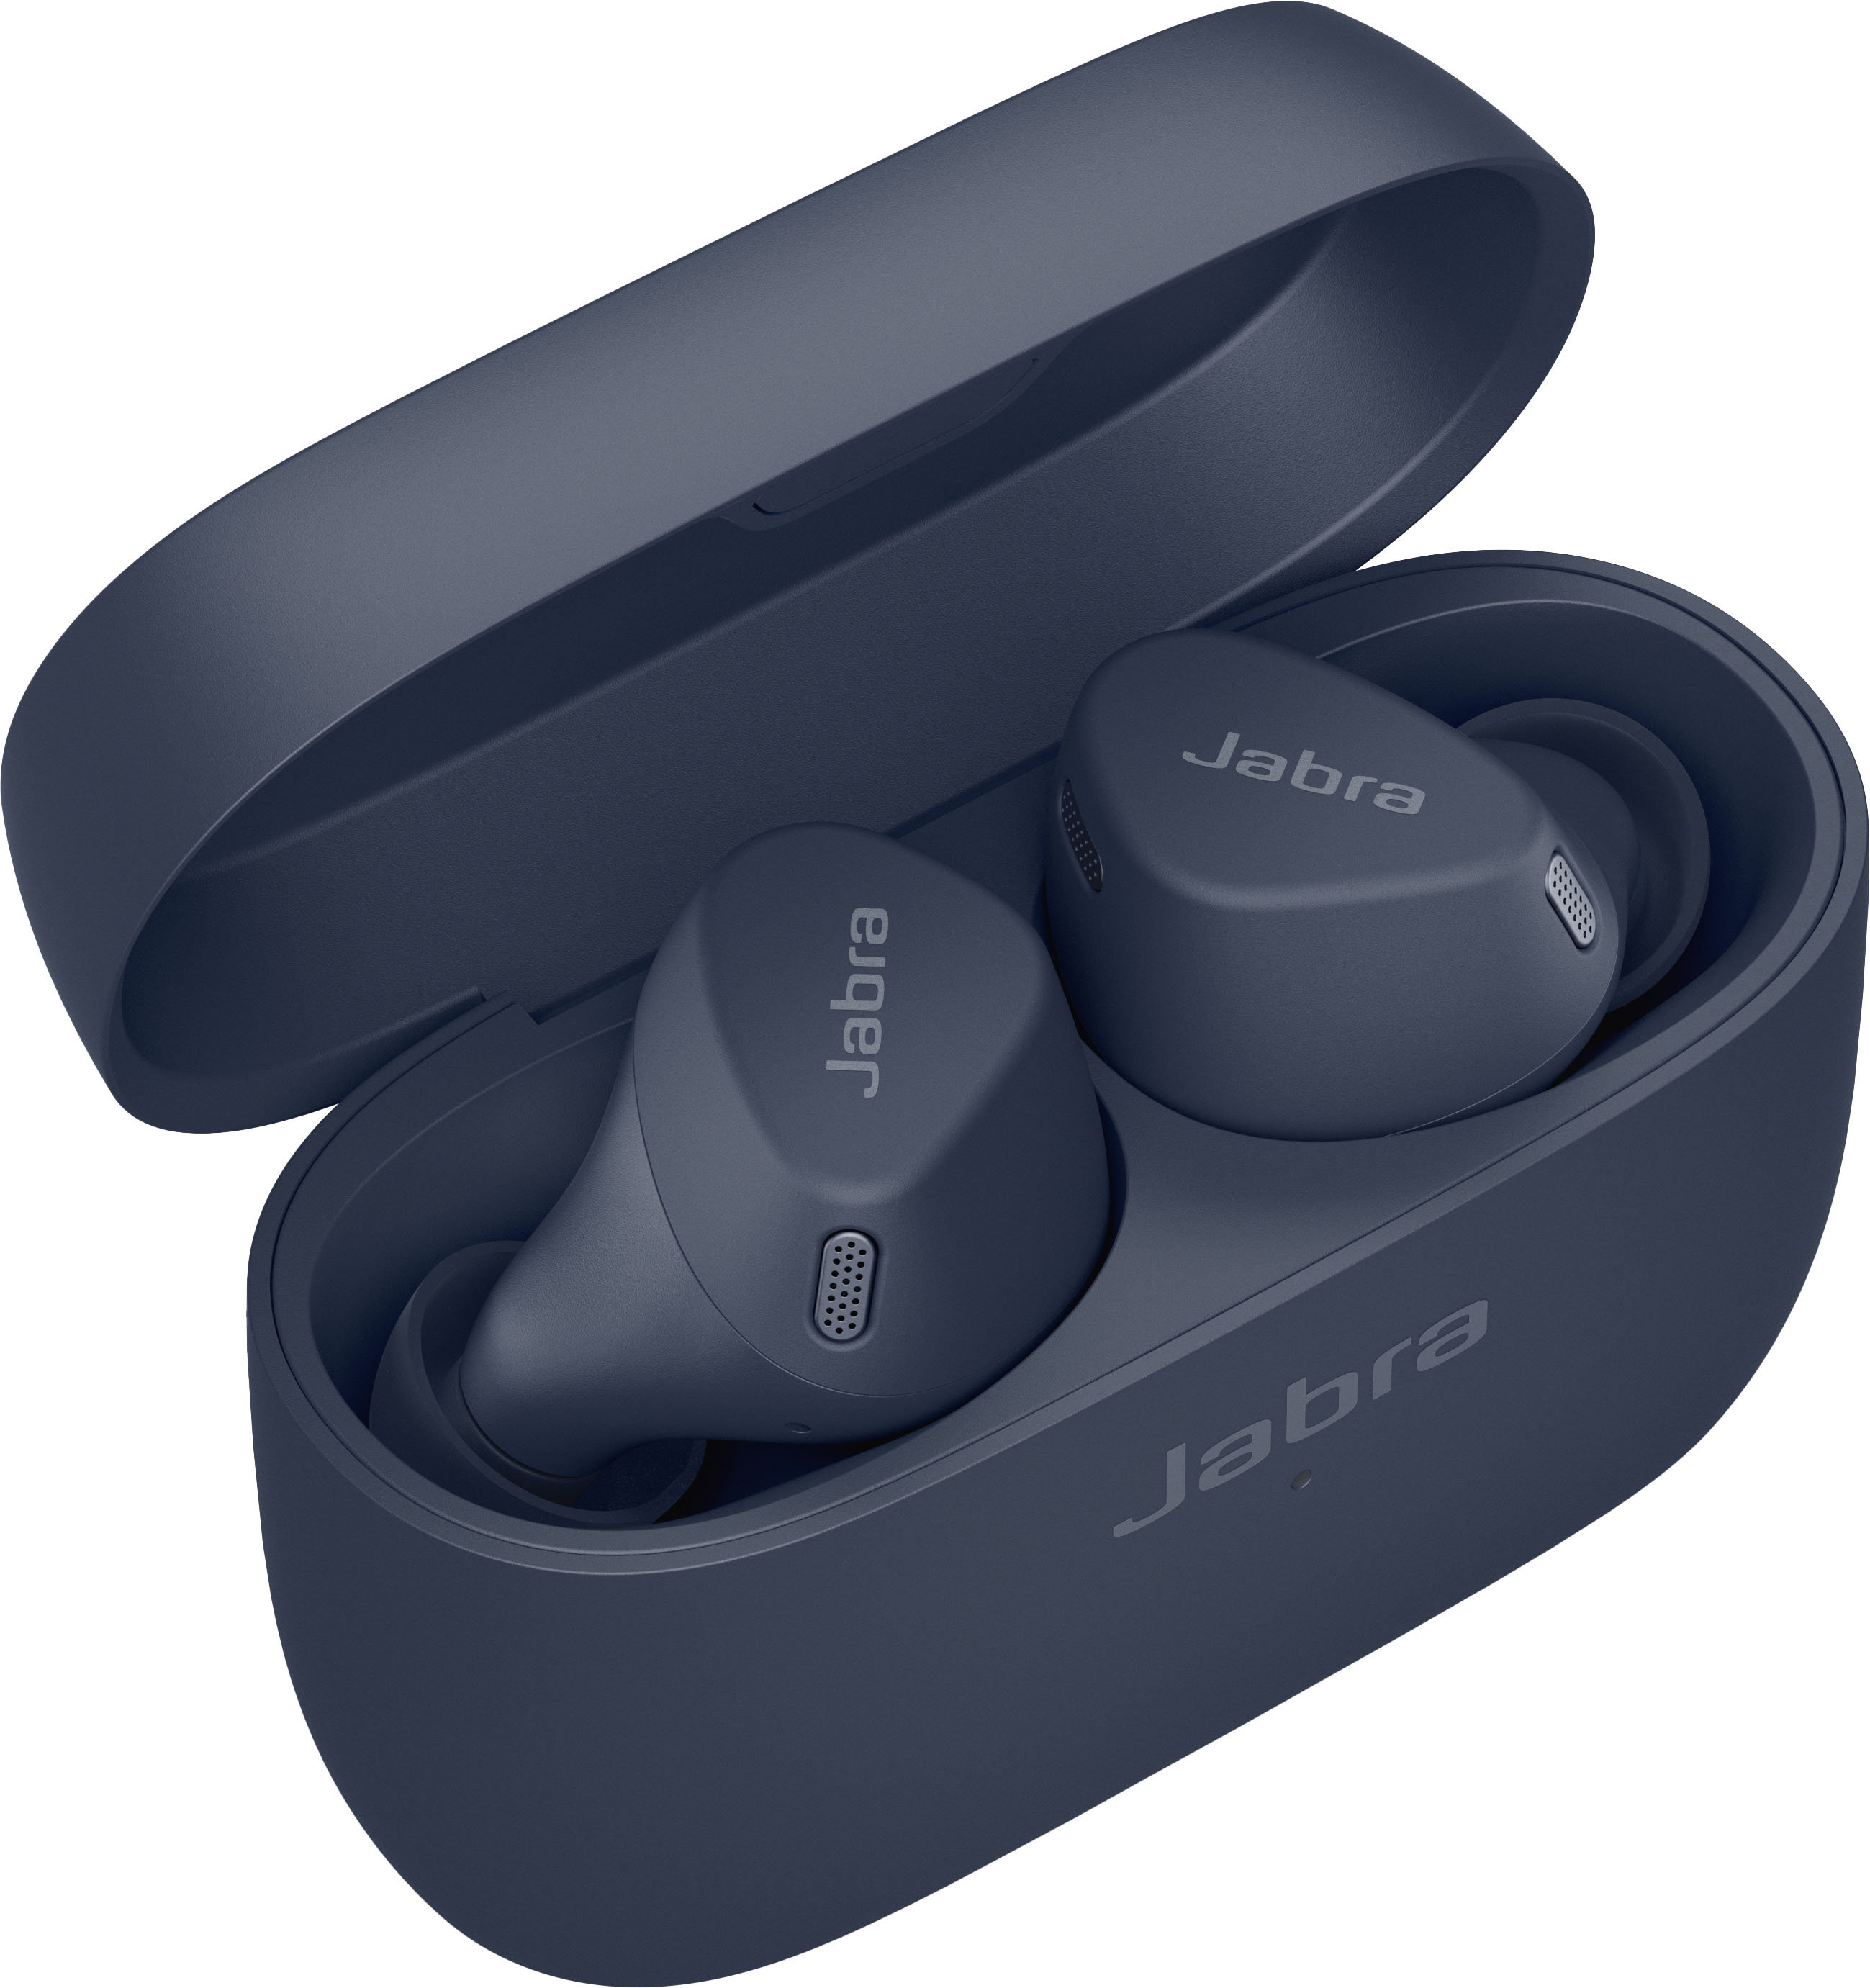 Angle View: Jabra - Elite 75t True Wireless Active Noise Cancelling In-Ear Headphones - Titanium Black